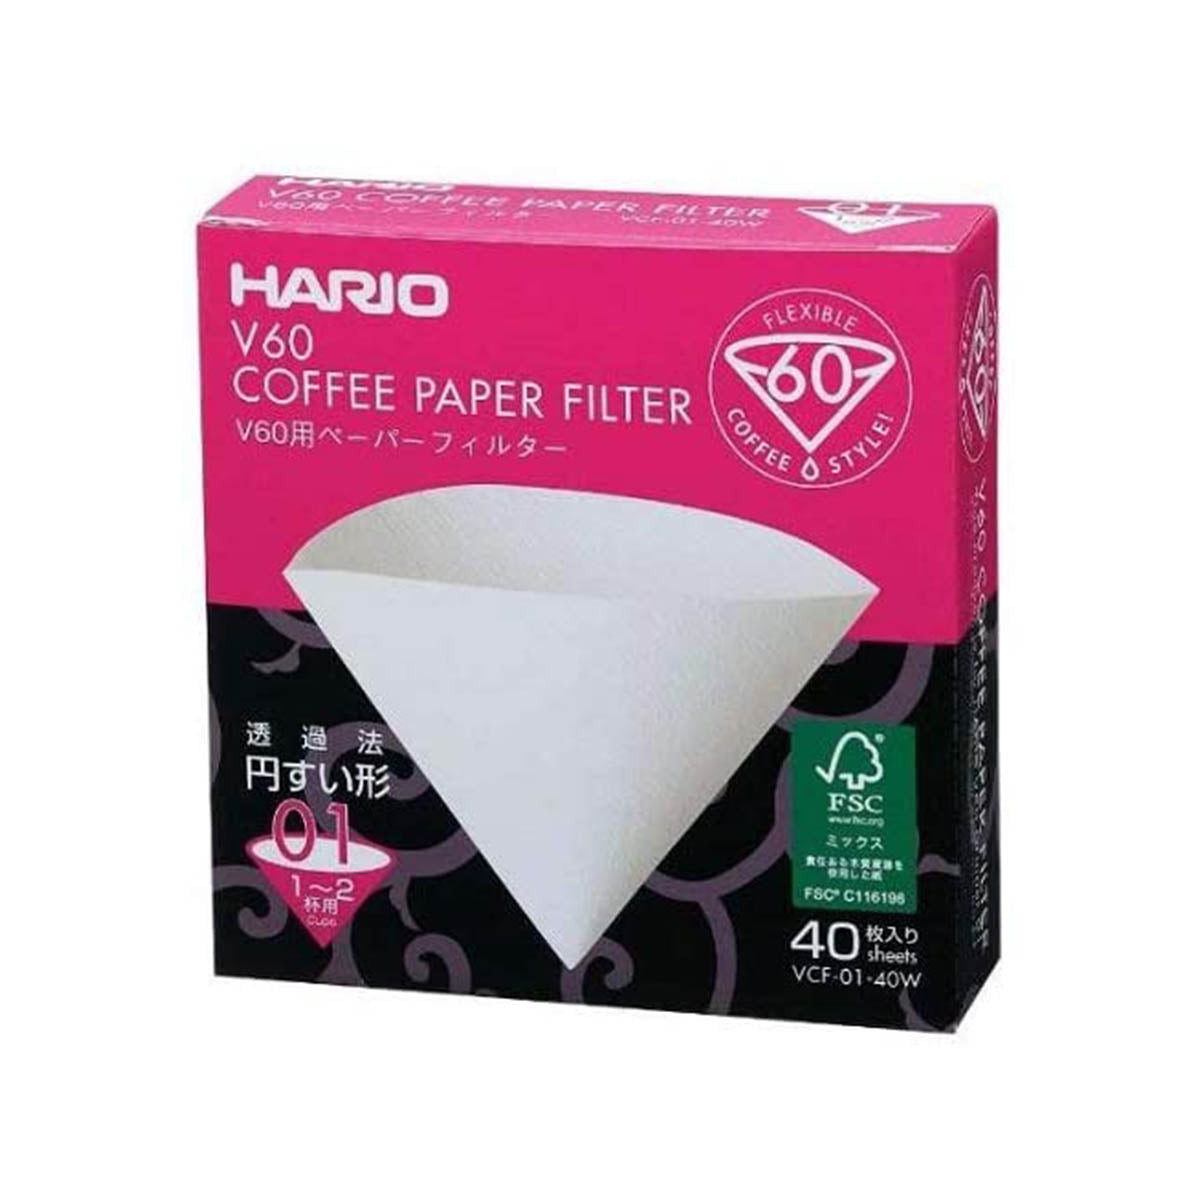 Hario V60 Filters 01 Size - Original